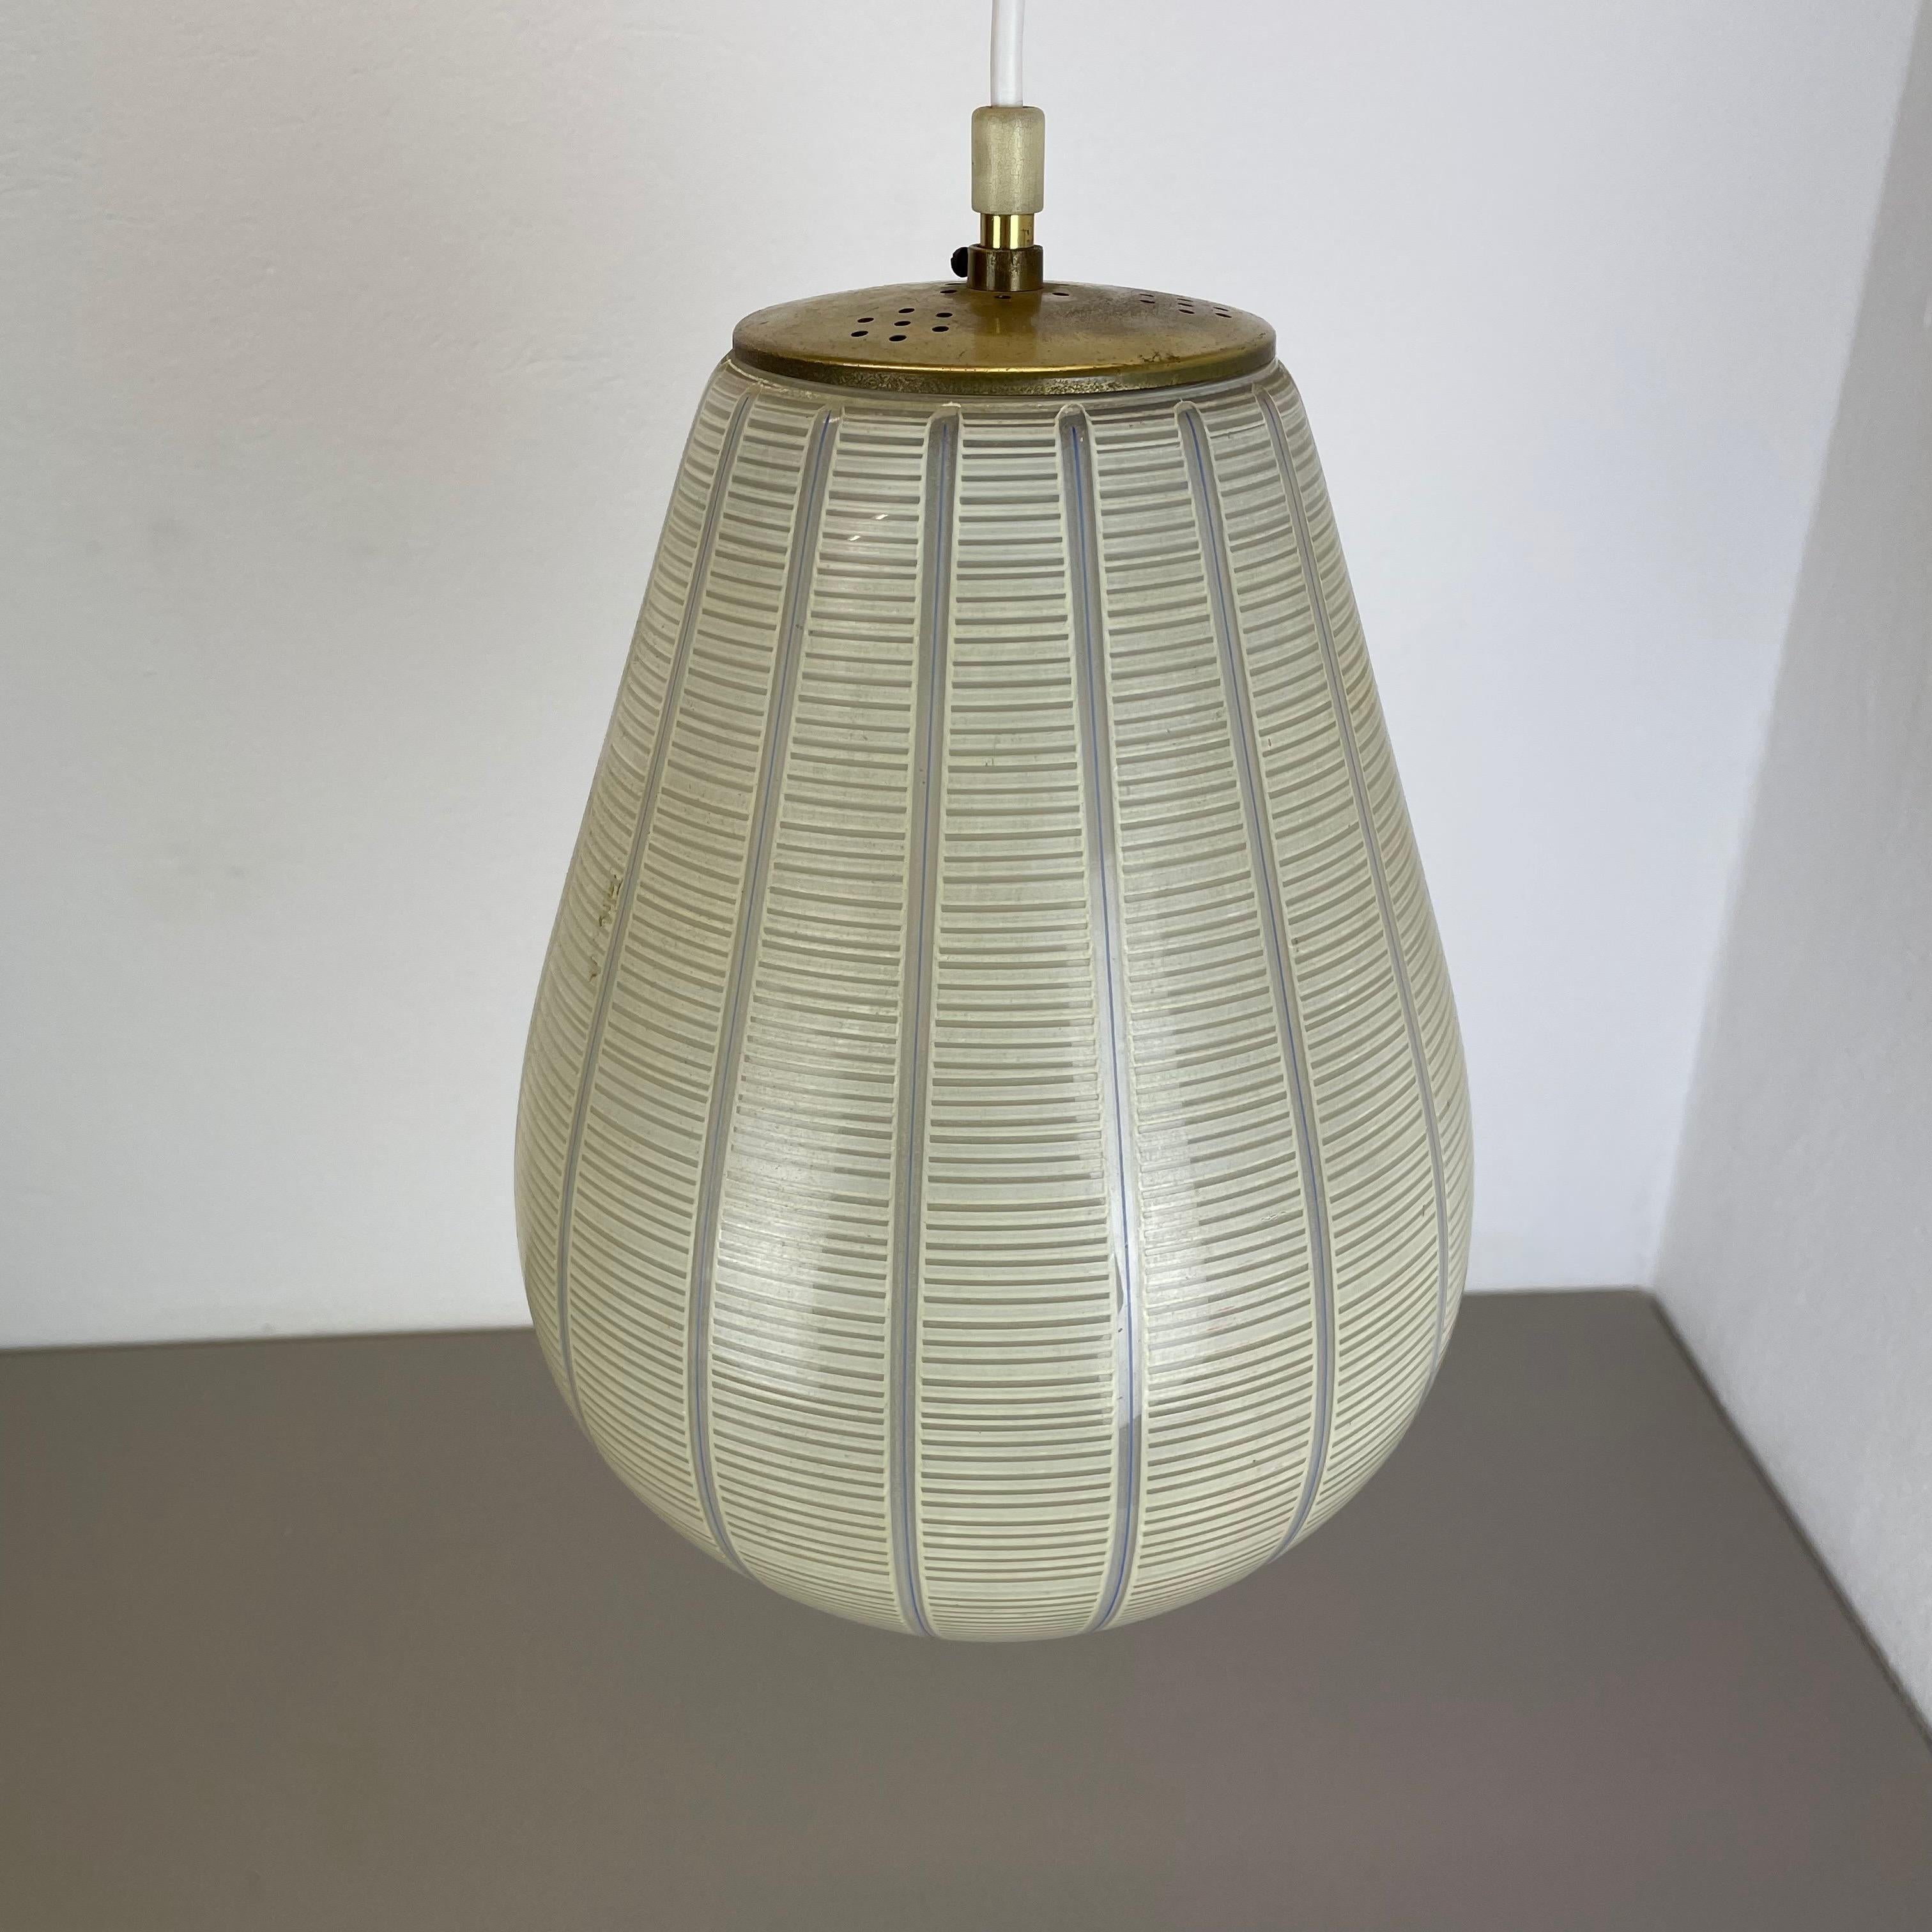 Midcentury Modernist Glass Stilnovo Style Hanging Light, Italy, 1950 For Sale 4